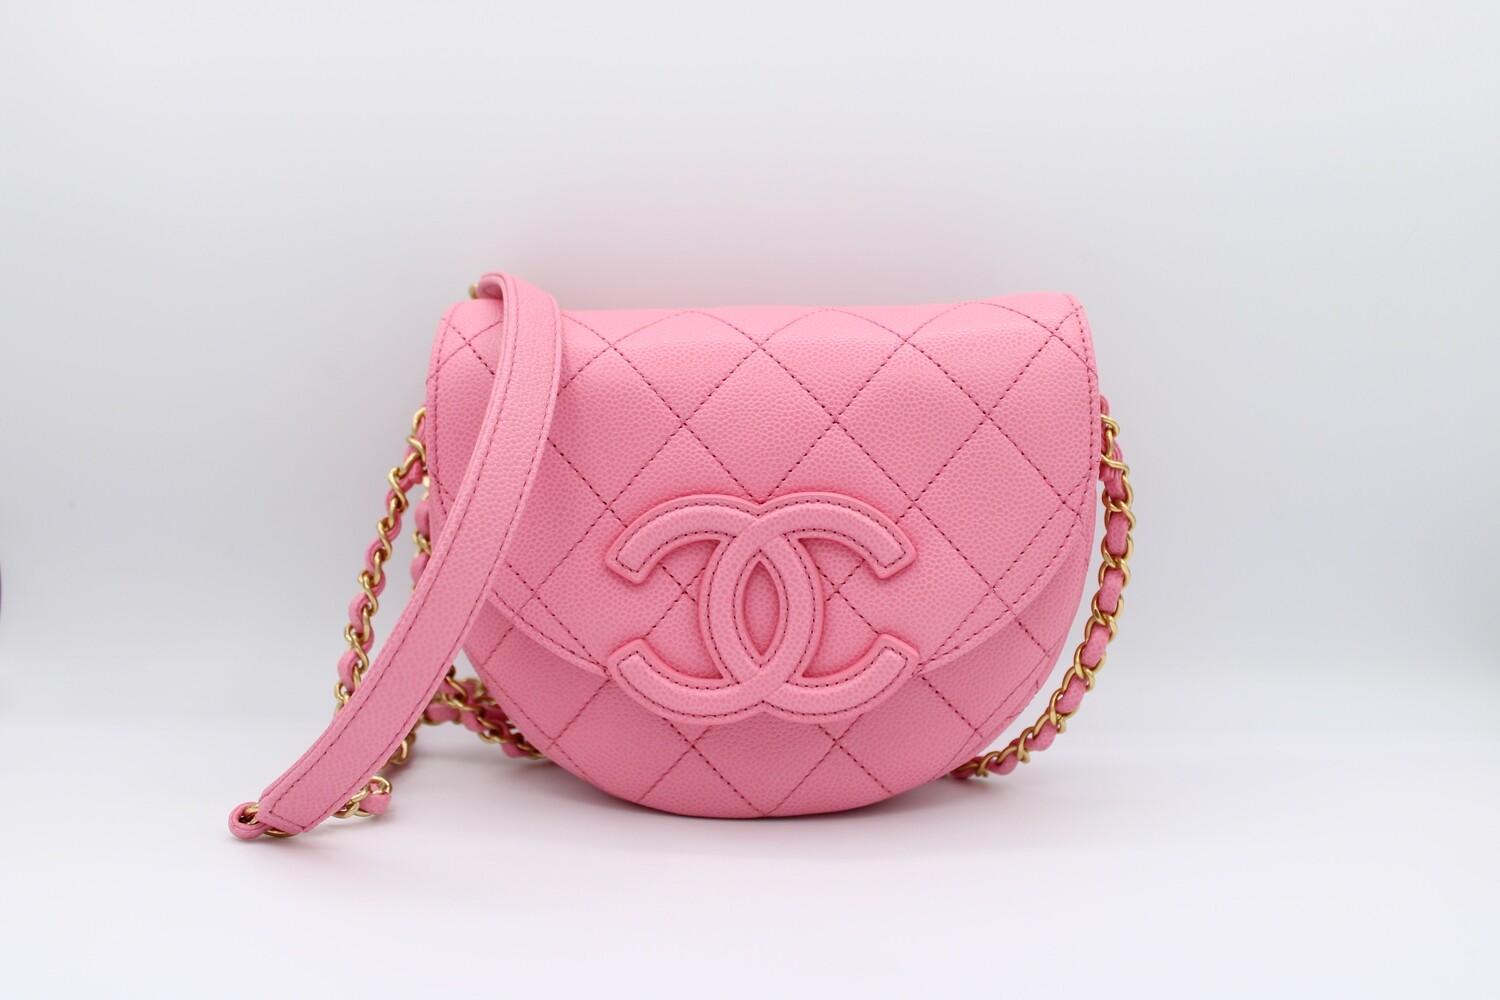 Chanel Mini Messenger Bag, Pink Caviar Leather, Gold Hardware, New in Box  GA006